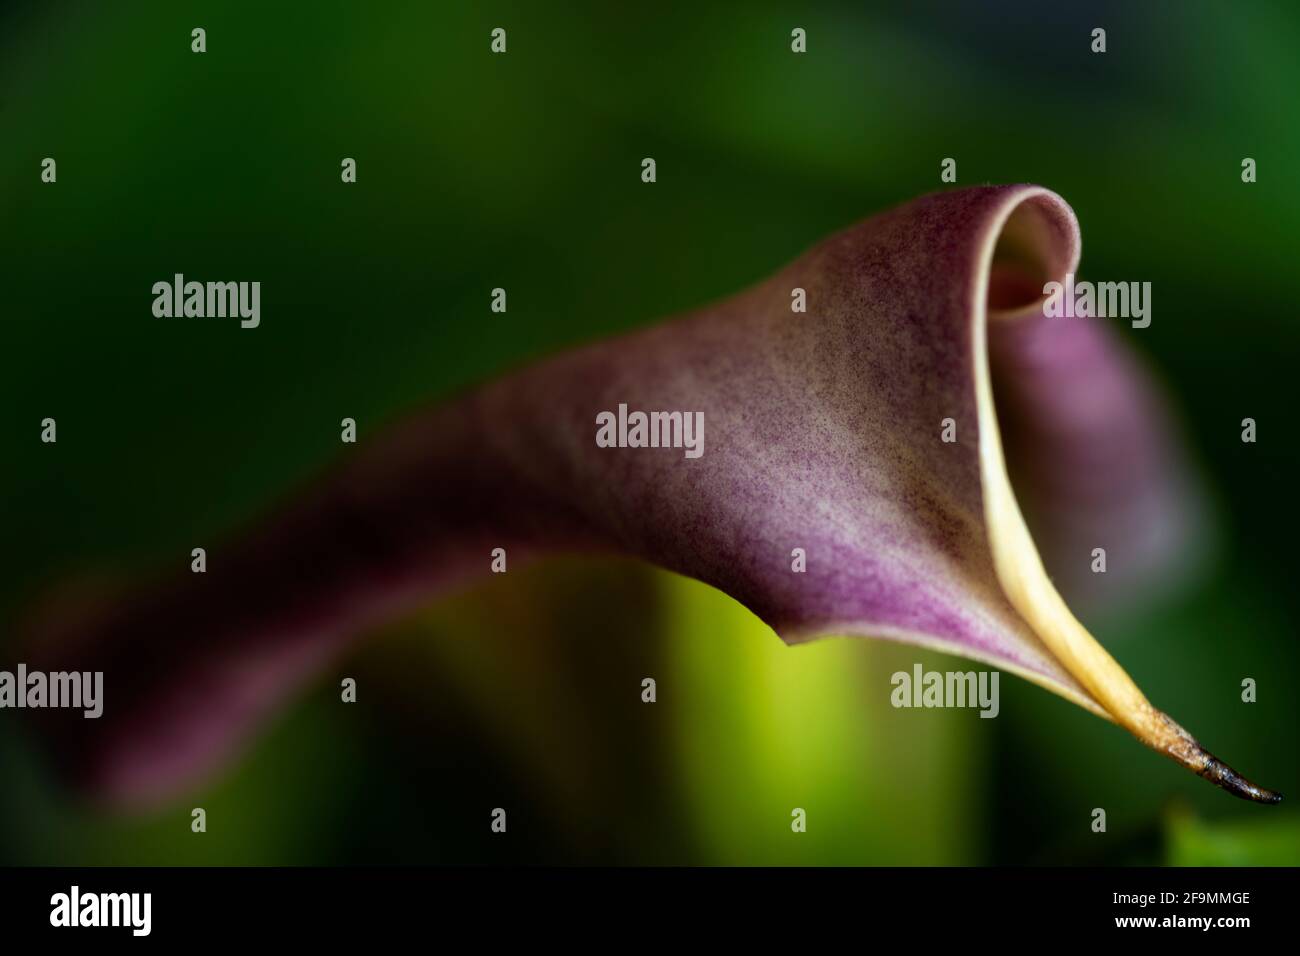 Extreme close-up image of calla flower Stock Photo